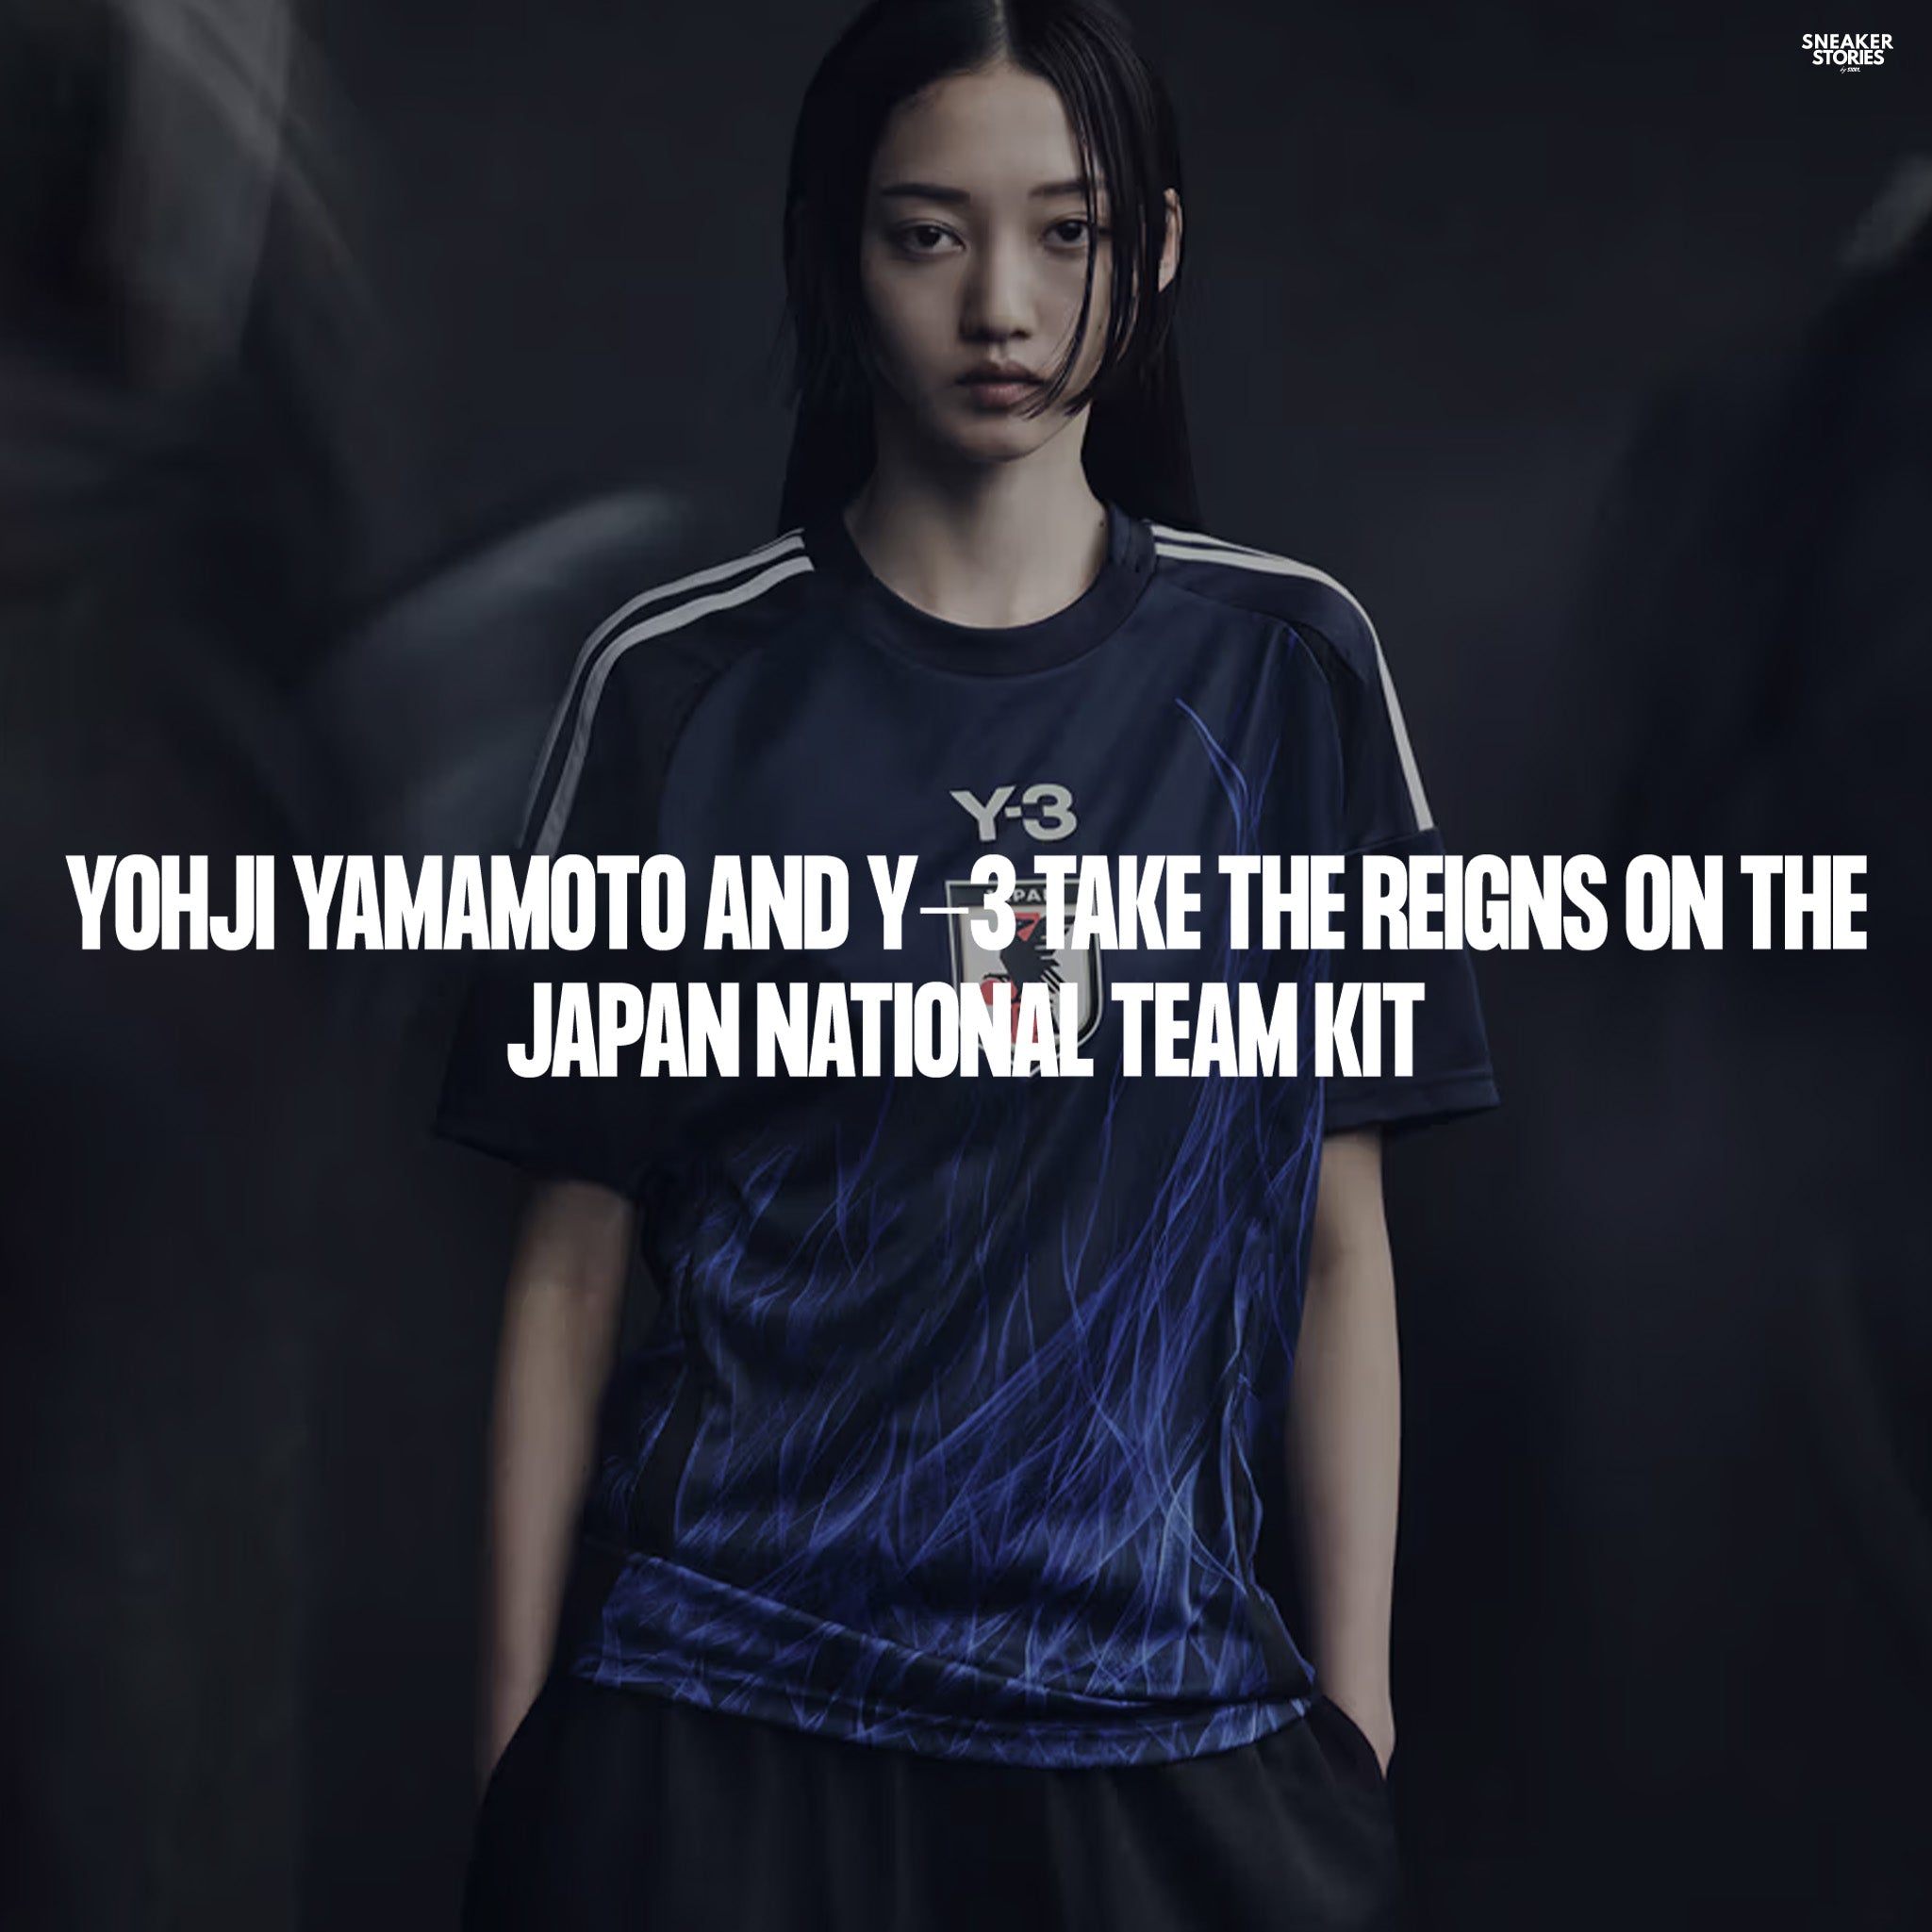 Yohji Yamamoto and Y-3 take the reigns on the Japan National team kit